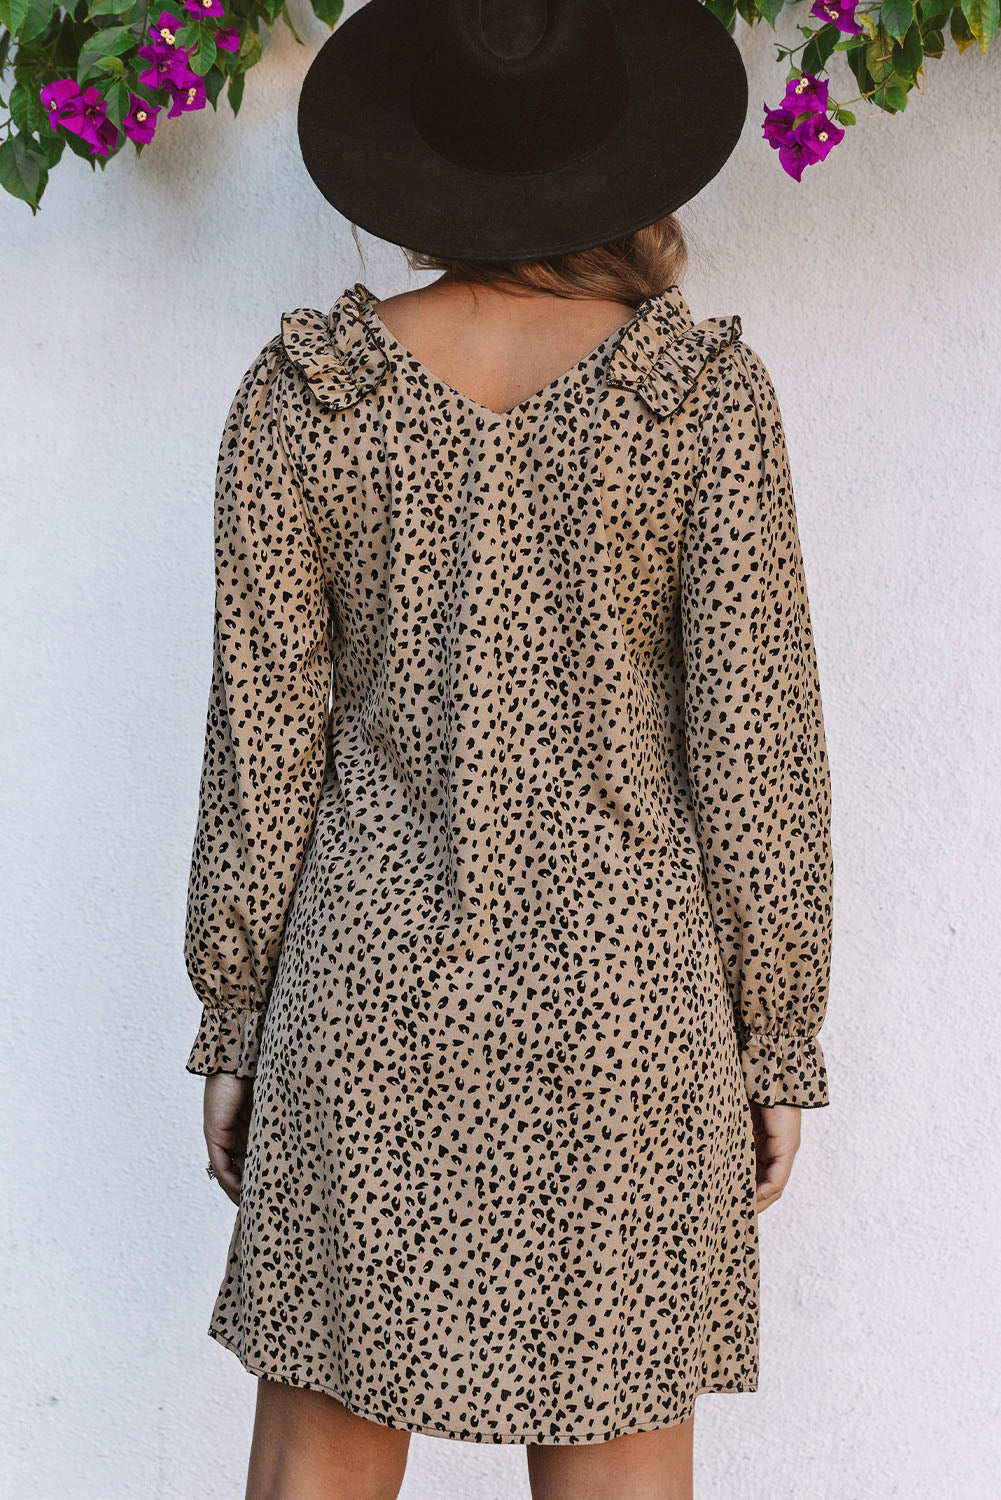 Khaki Leopard Frill Trim V Neck Dress